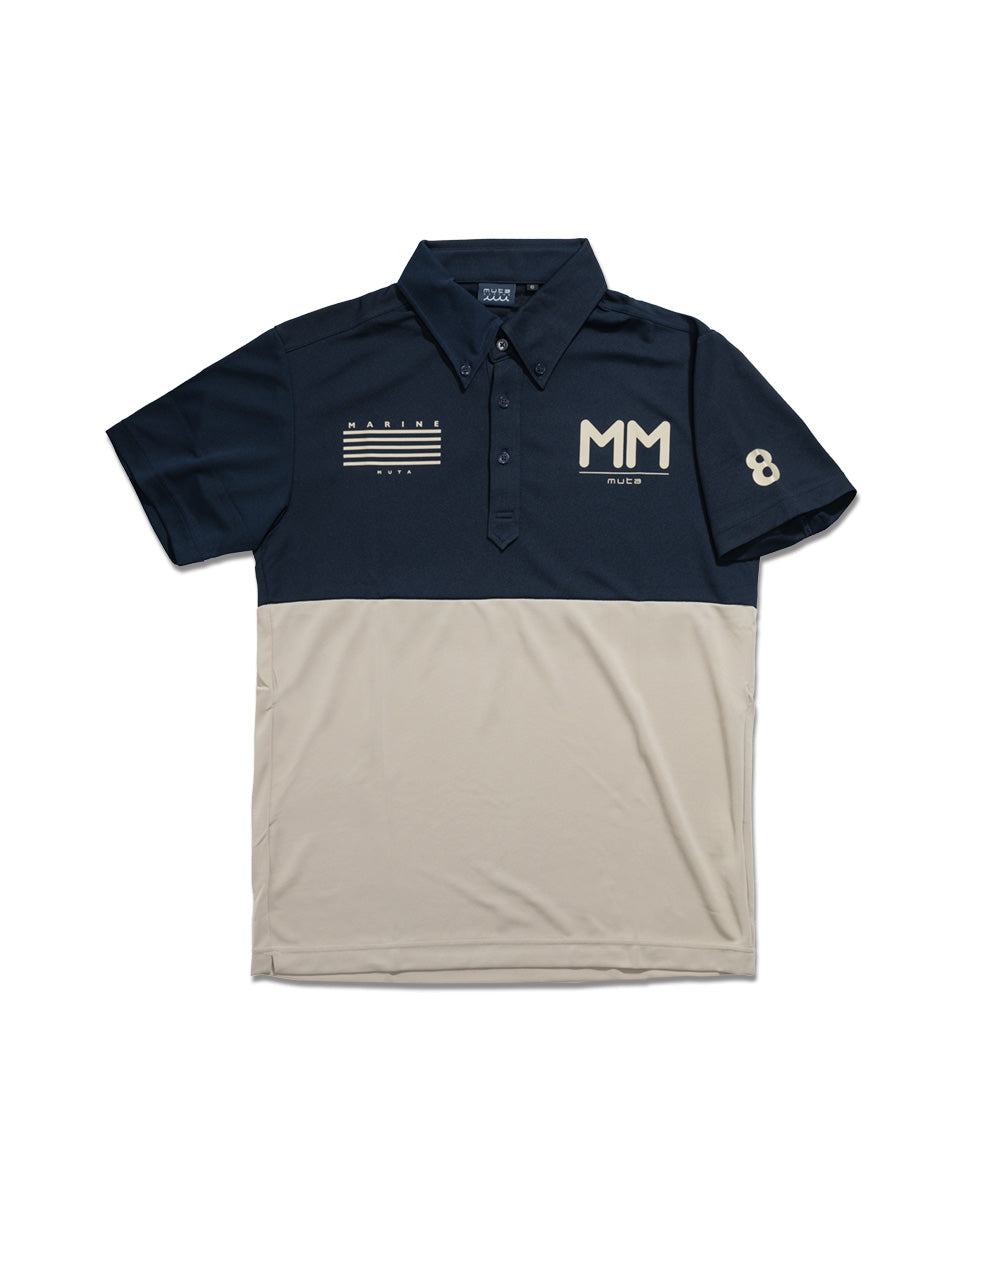 MM バイカラーポロシャツ [全7色] – muta Online Store